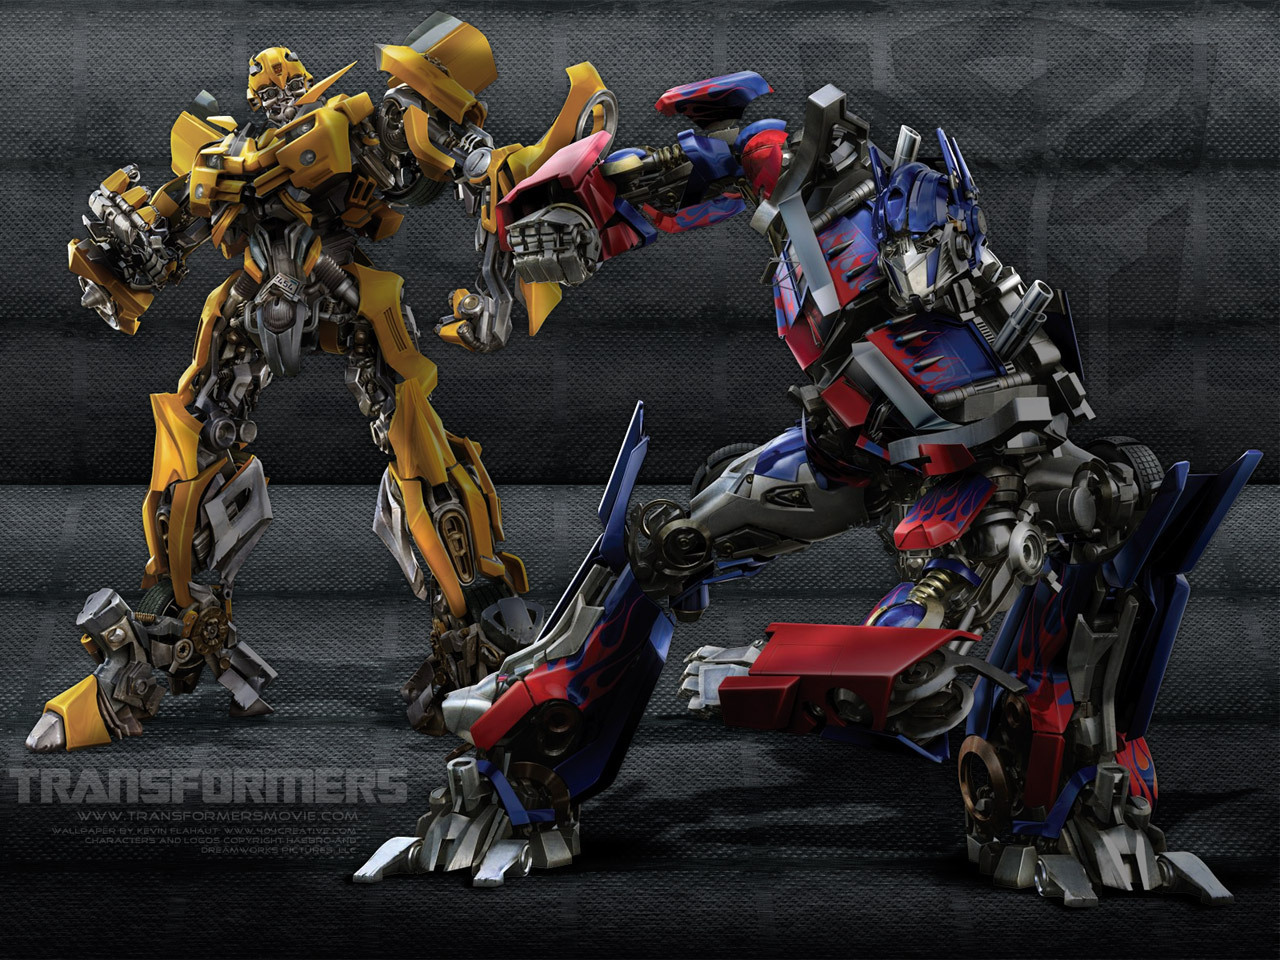 Transformers 2 transformer team